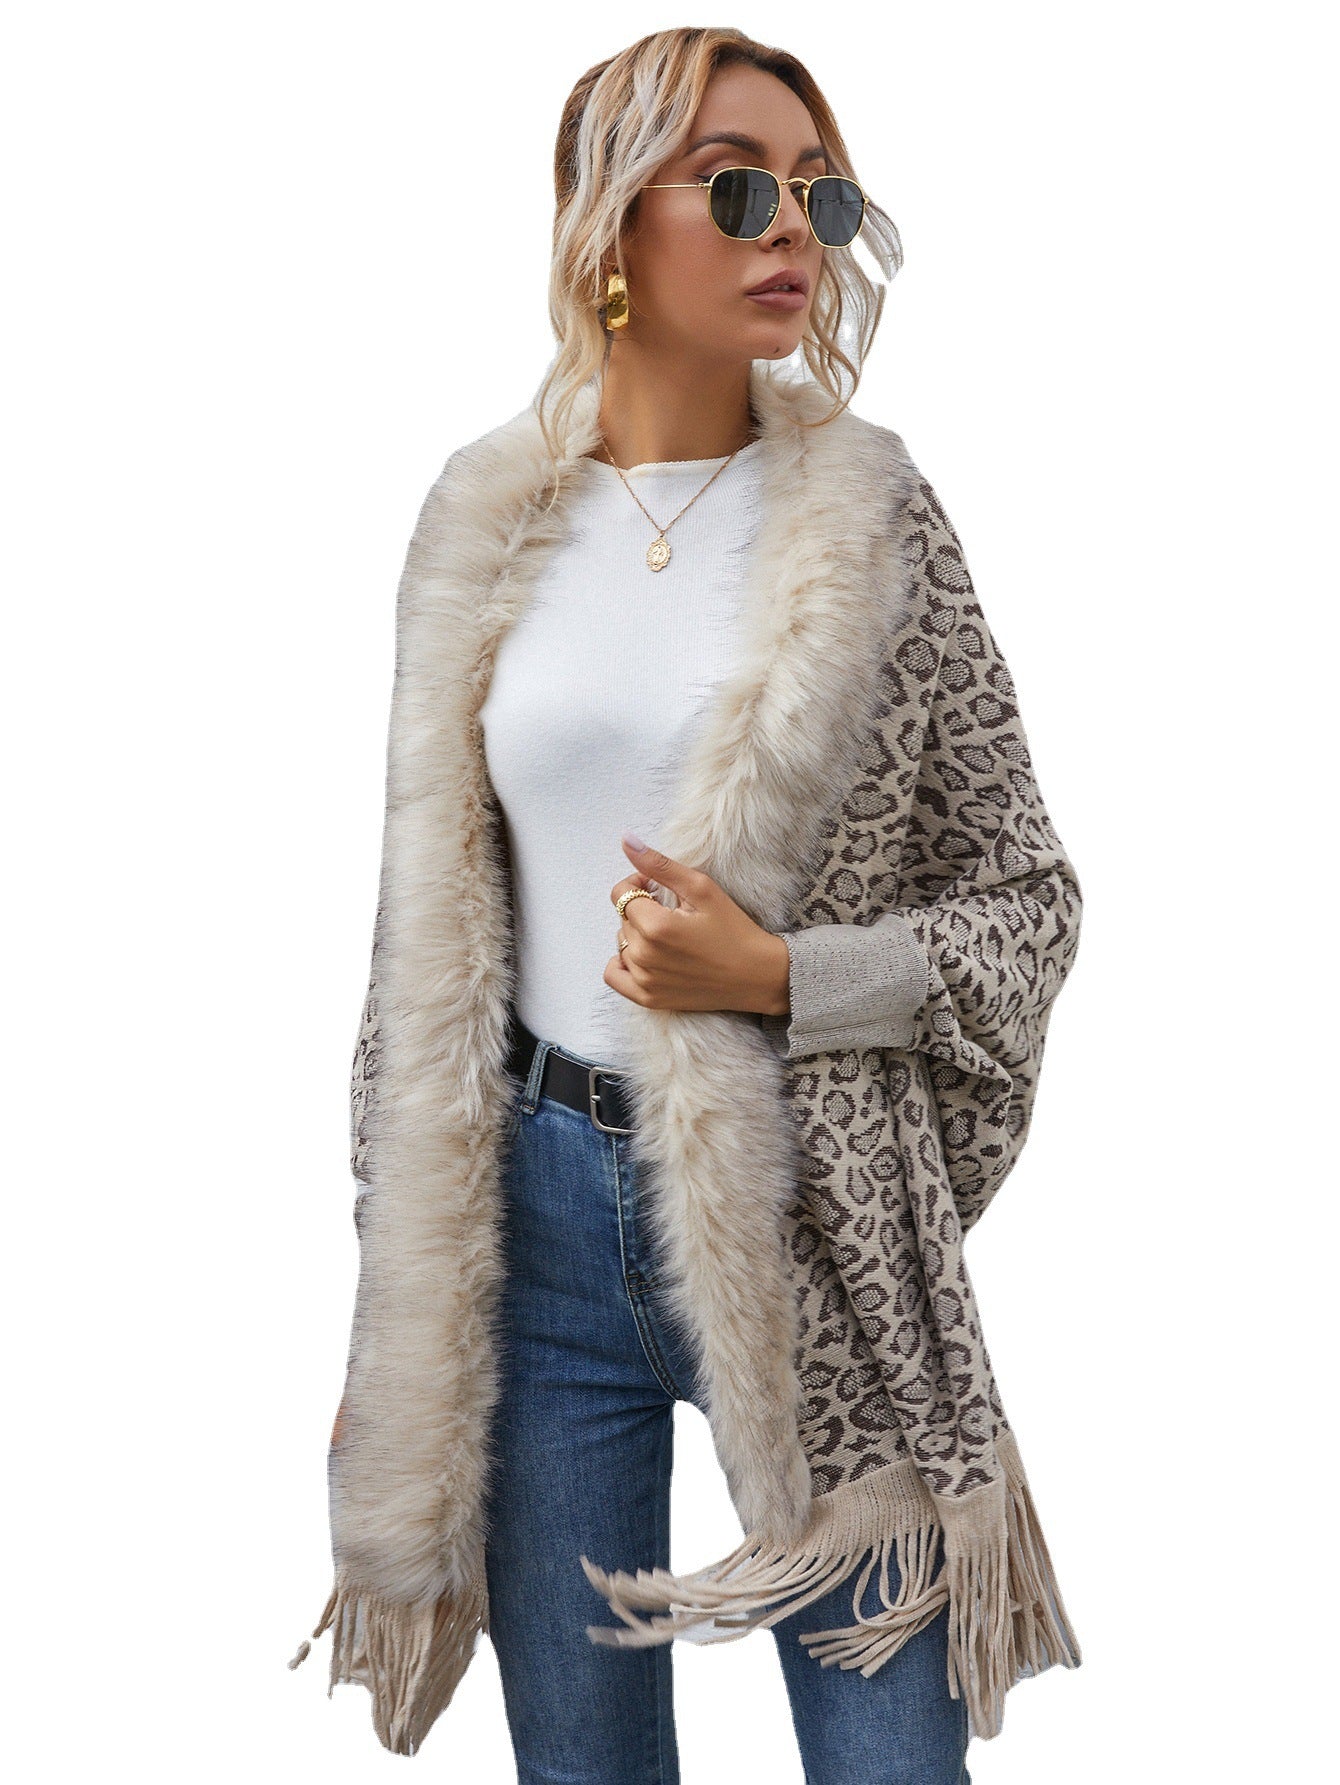 2021 leopard sweater autumn and winter new wool collar cardigan shawl knitted coat - Wonkey Donkey Bazaar